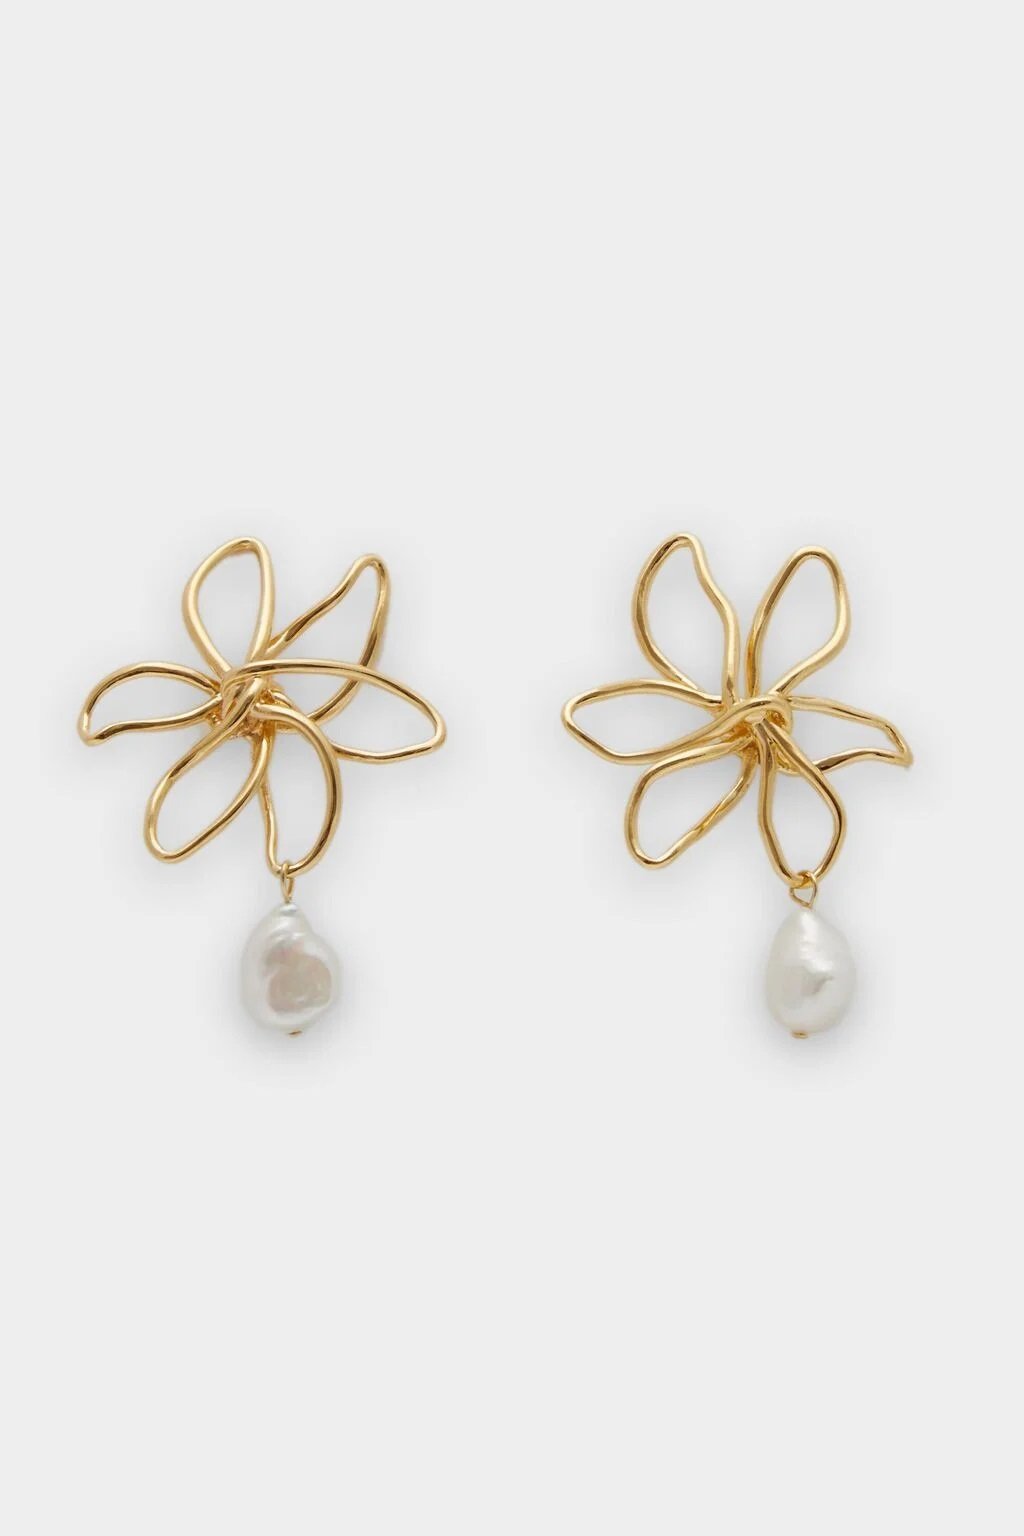 Carolina Herrera Jasmine Lines Earrings in GoldWhite.jpg